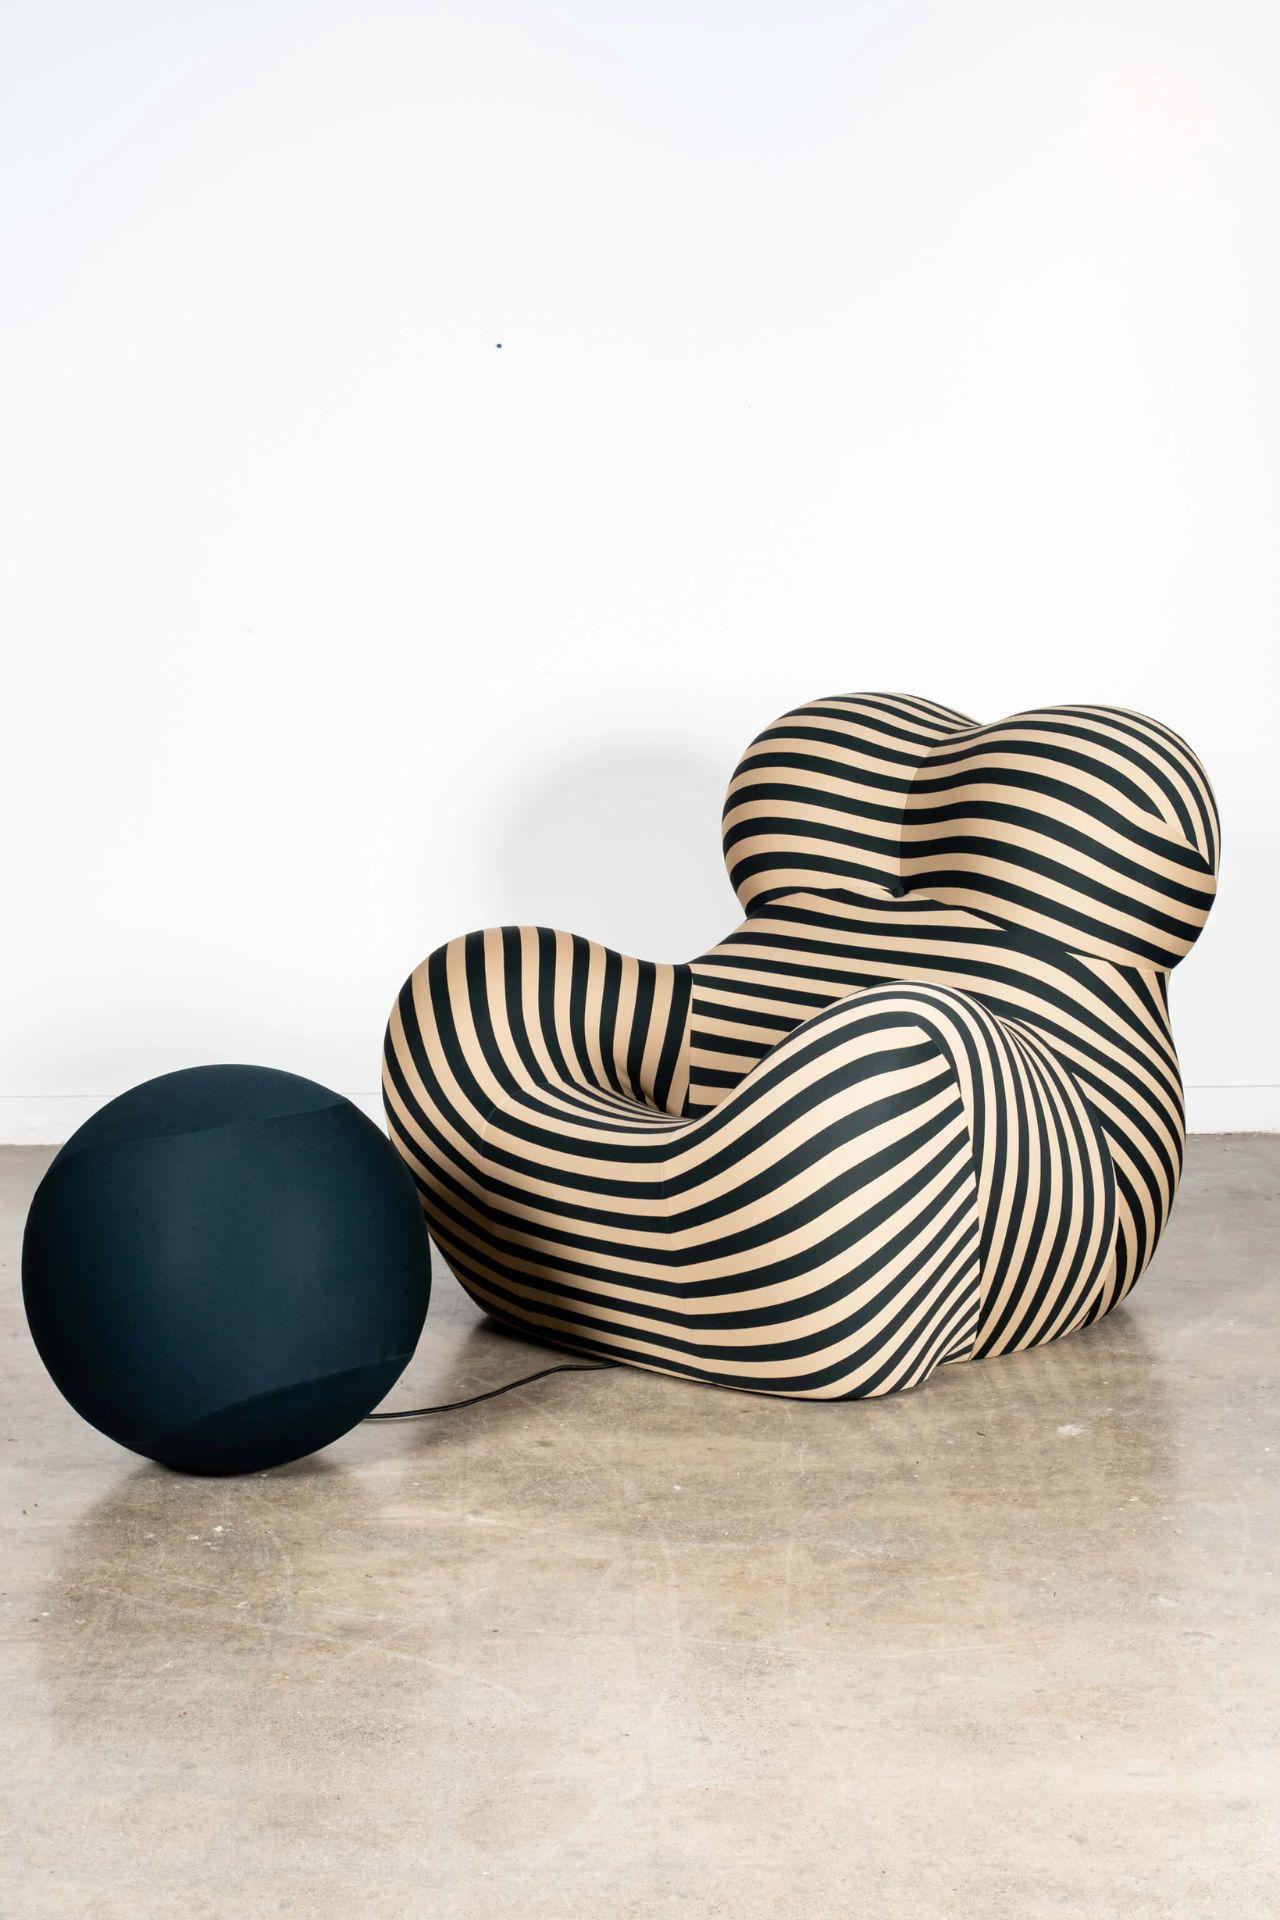 Post-Modern B&B Italia 'La Mamma' Up 5/6 Lounge Chair&Ottoman, Green Stripe by Gaetano Pesce For Sale